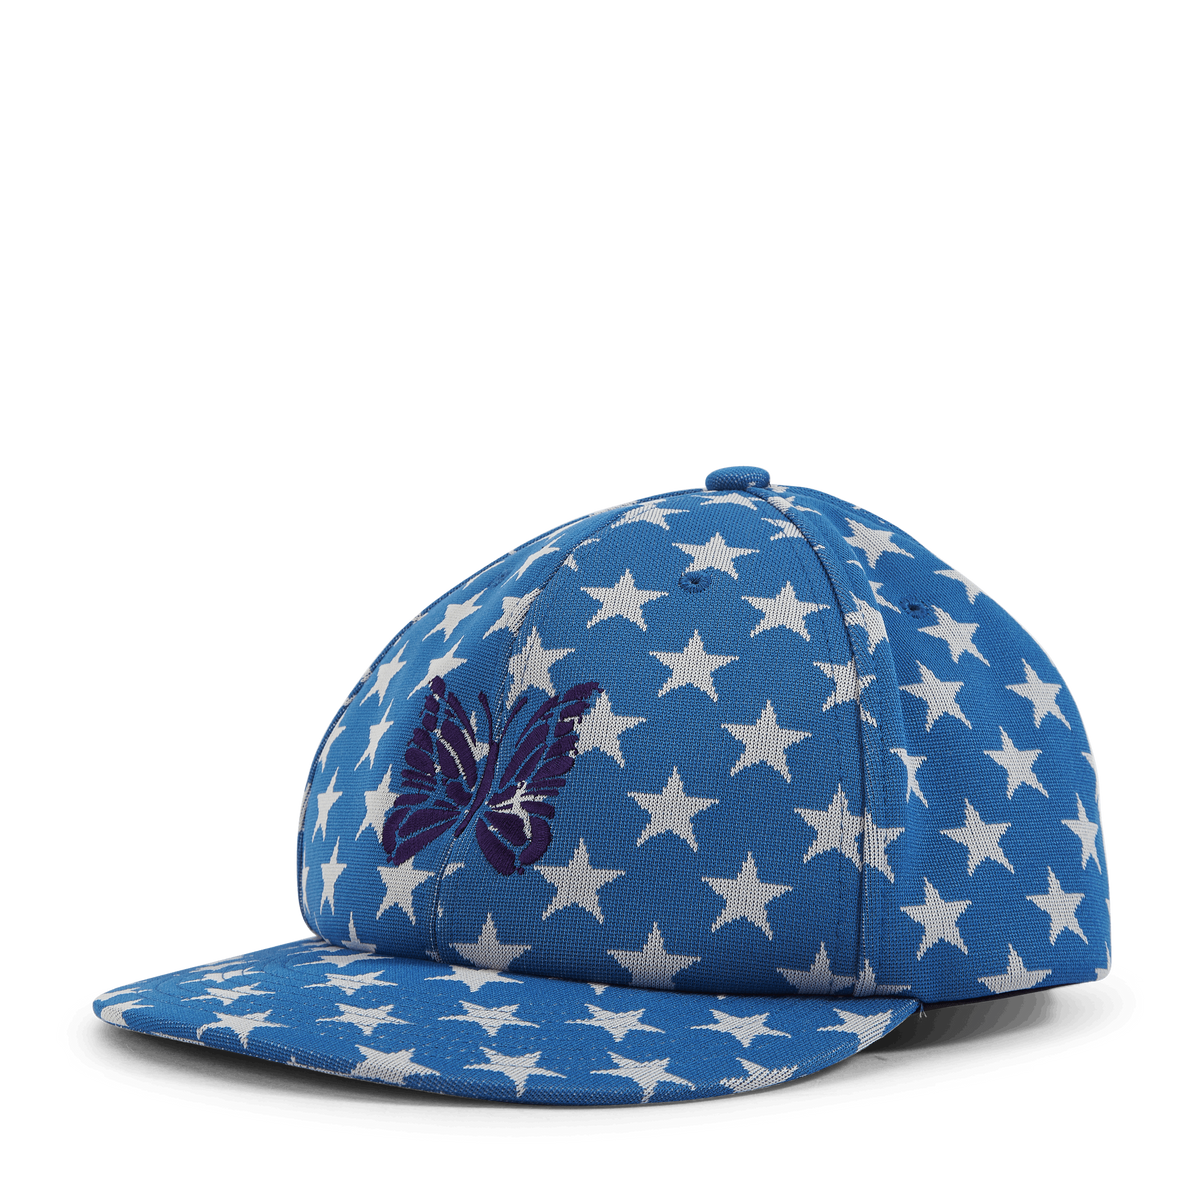 Needles Baseball Cap - Poly Jq C-star